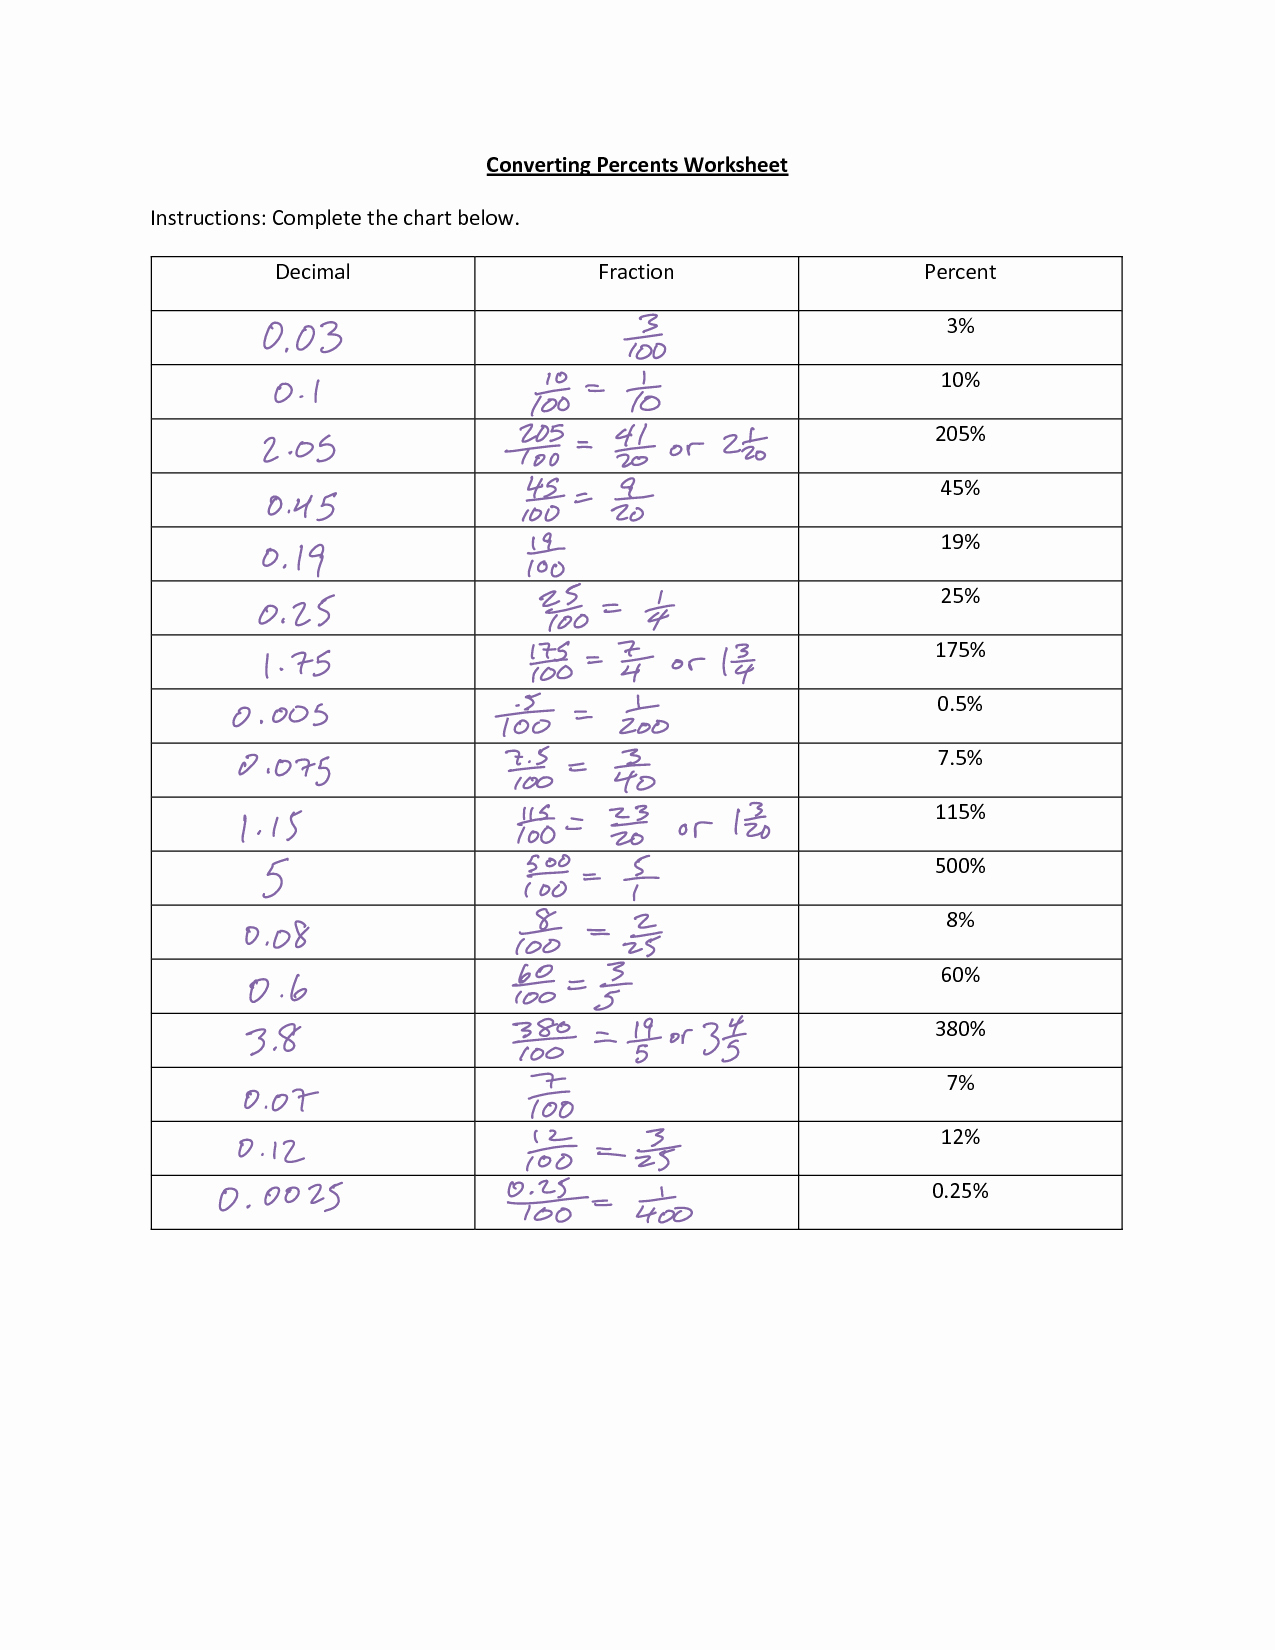 Fraction Decimal Percent Conversion Worksheet Elegant Homework Help Converting Fractions to Decimals Ahdaaf